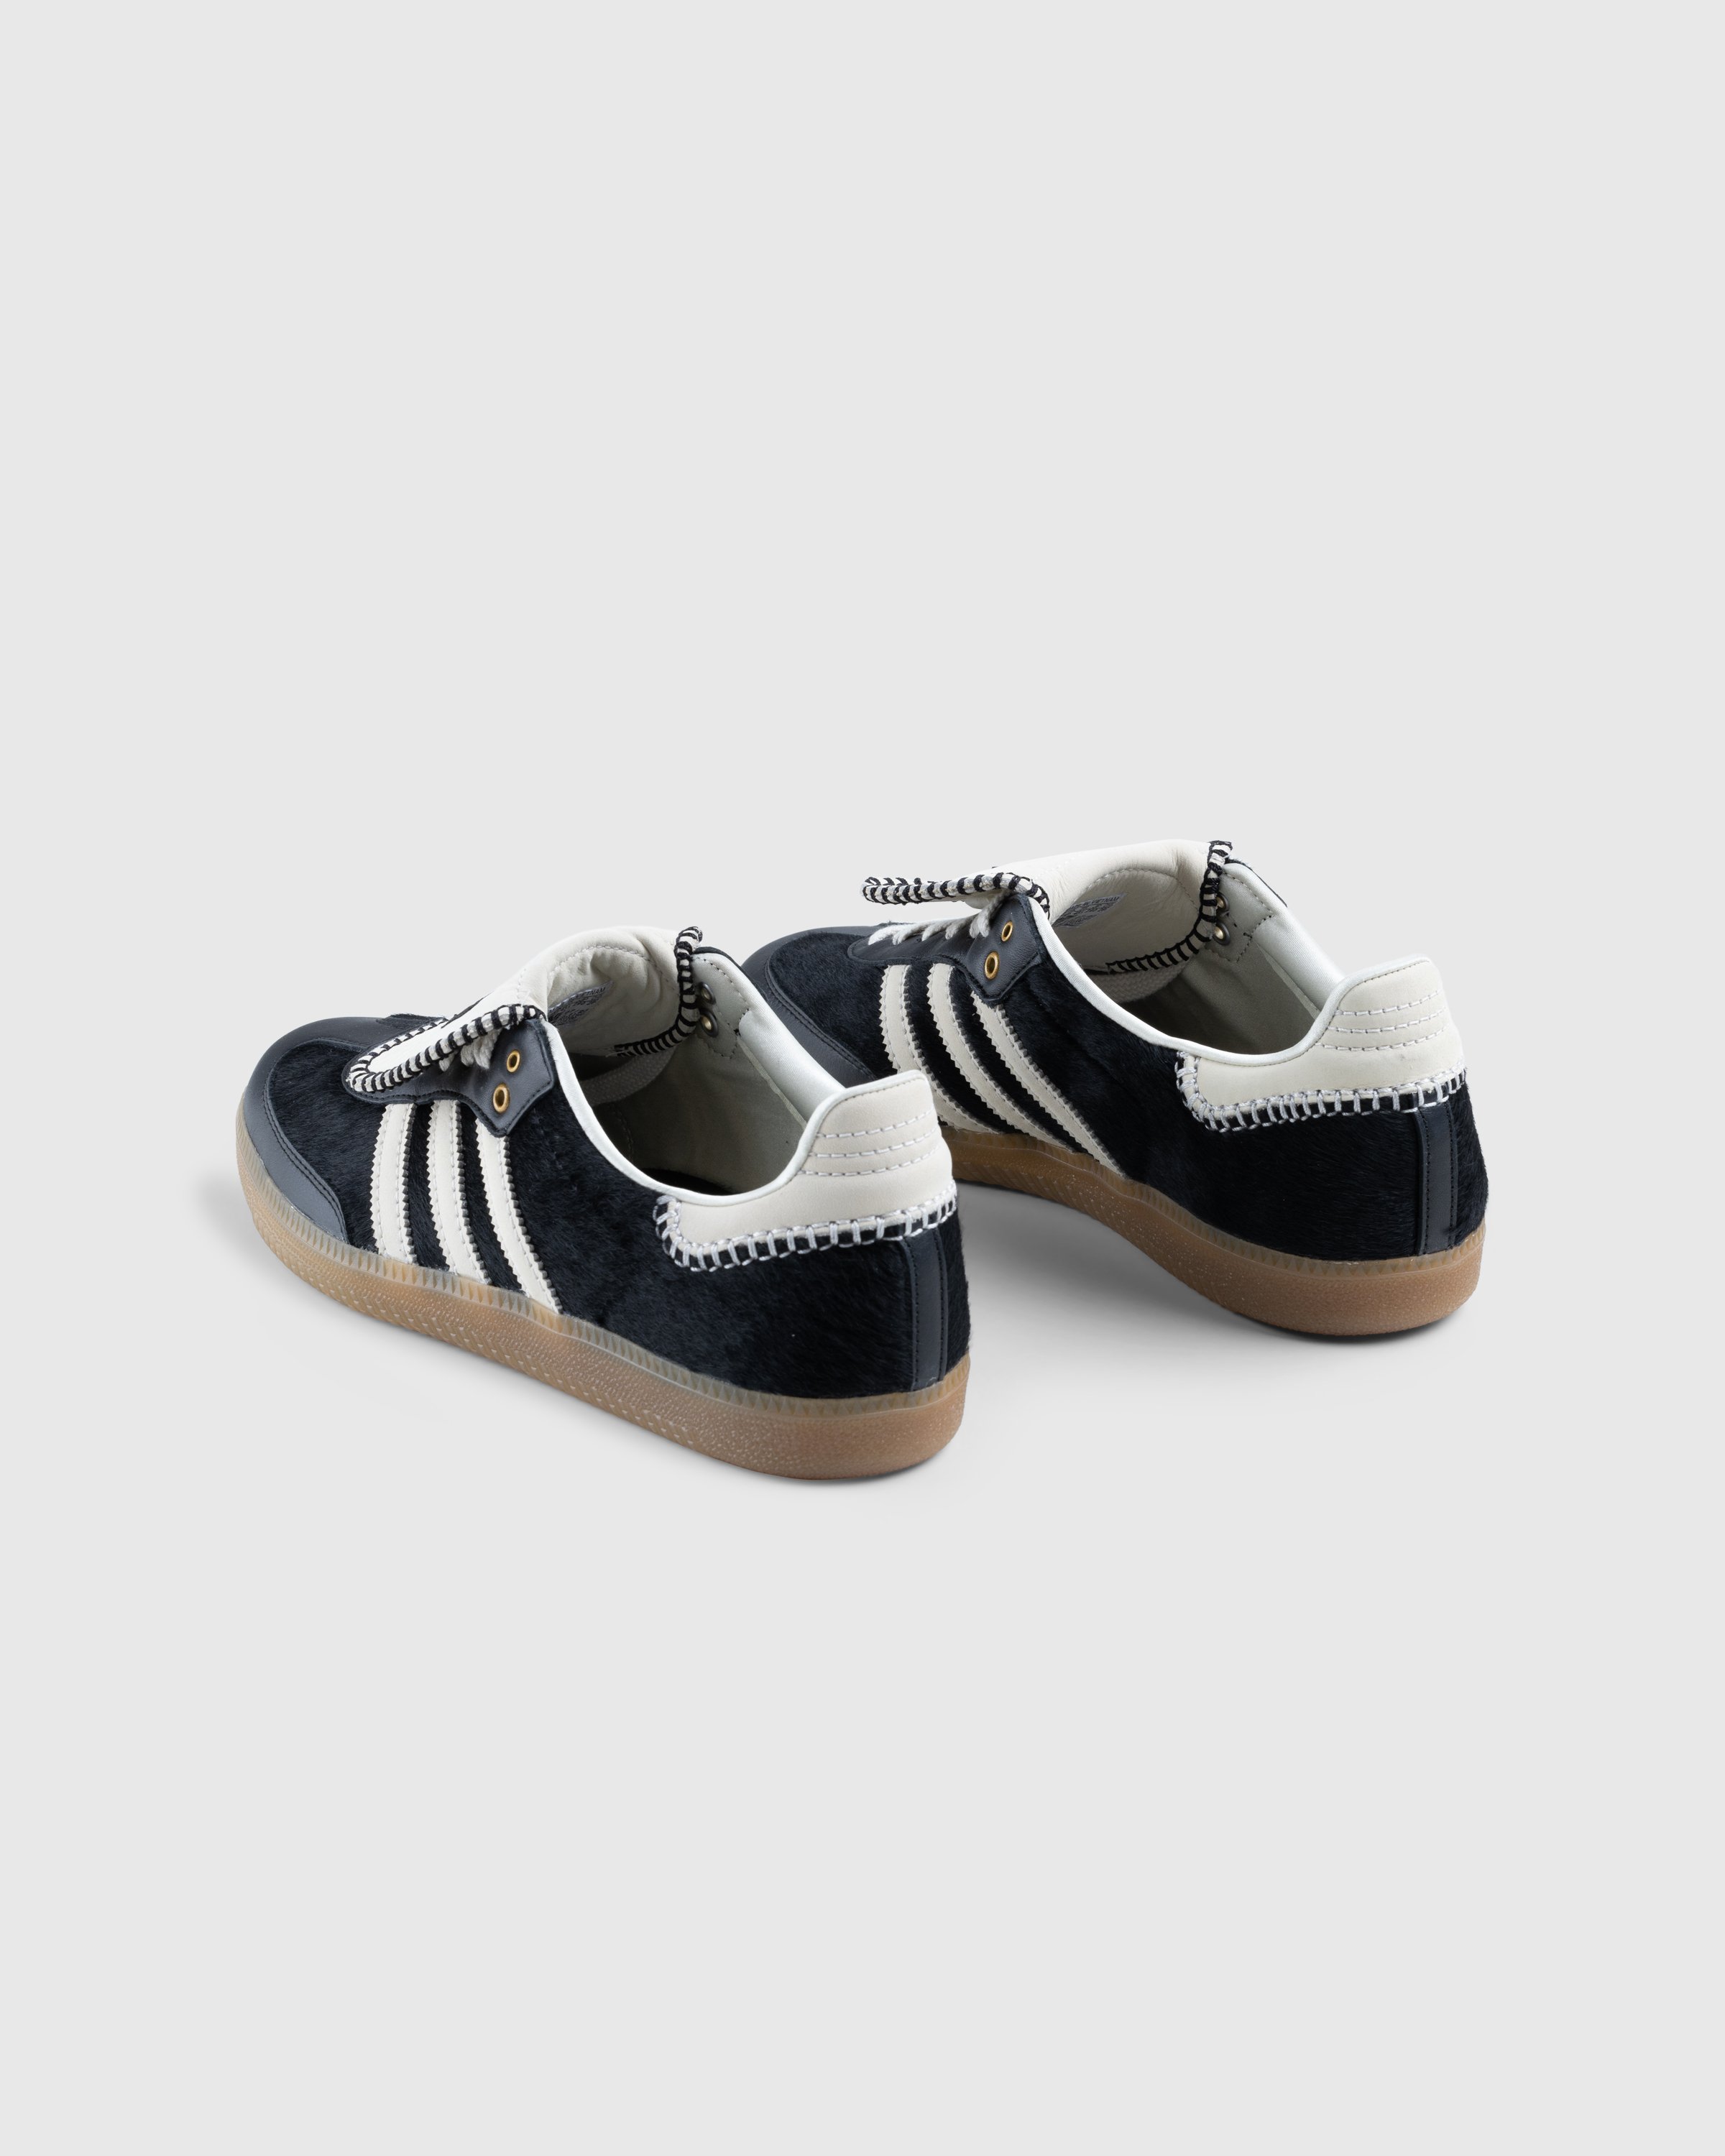 Adidas x Wales Bonner - WB PONY TONAL SAMBA CBLACK/CWHITE/CWHITE - Footwear - Black - Image 4